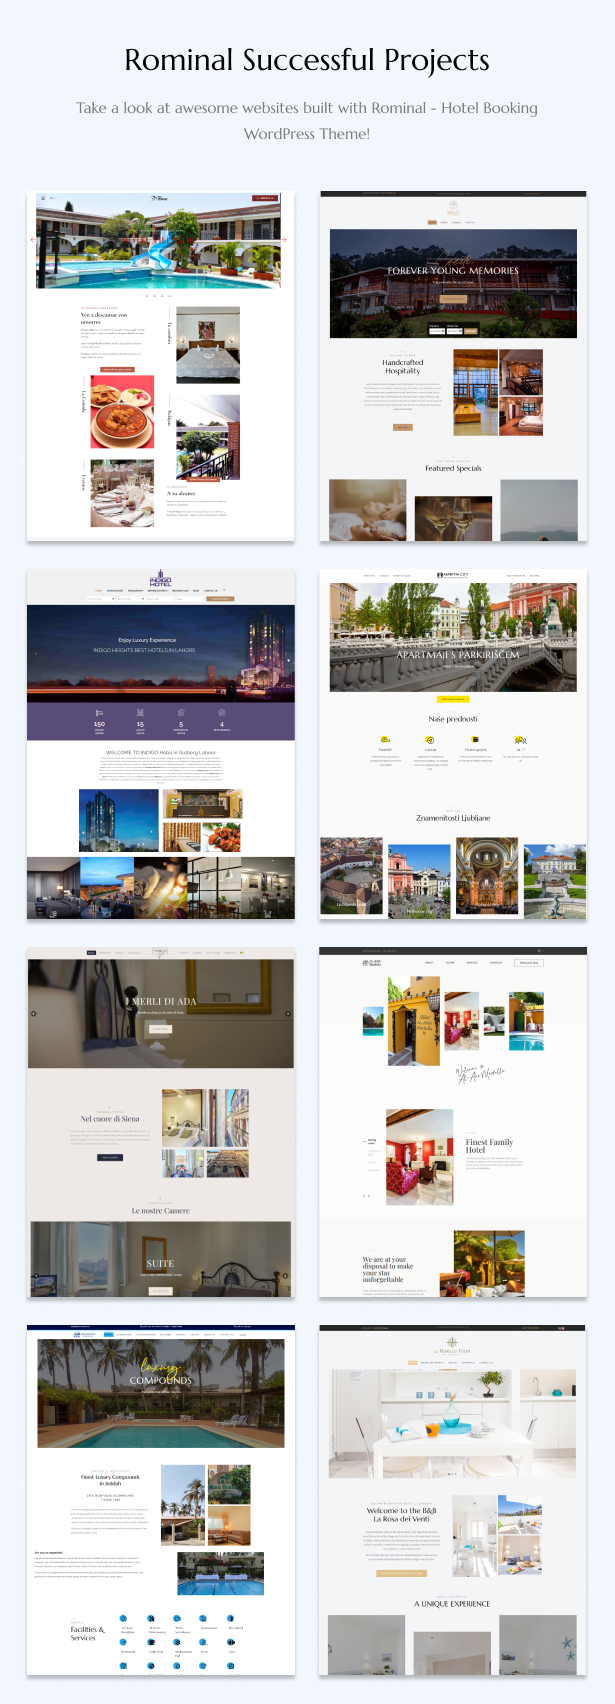 Rominal - Hotel Booking WordPress Theme Showcase